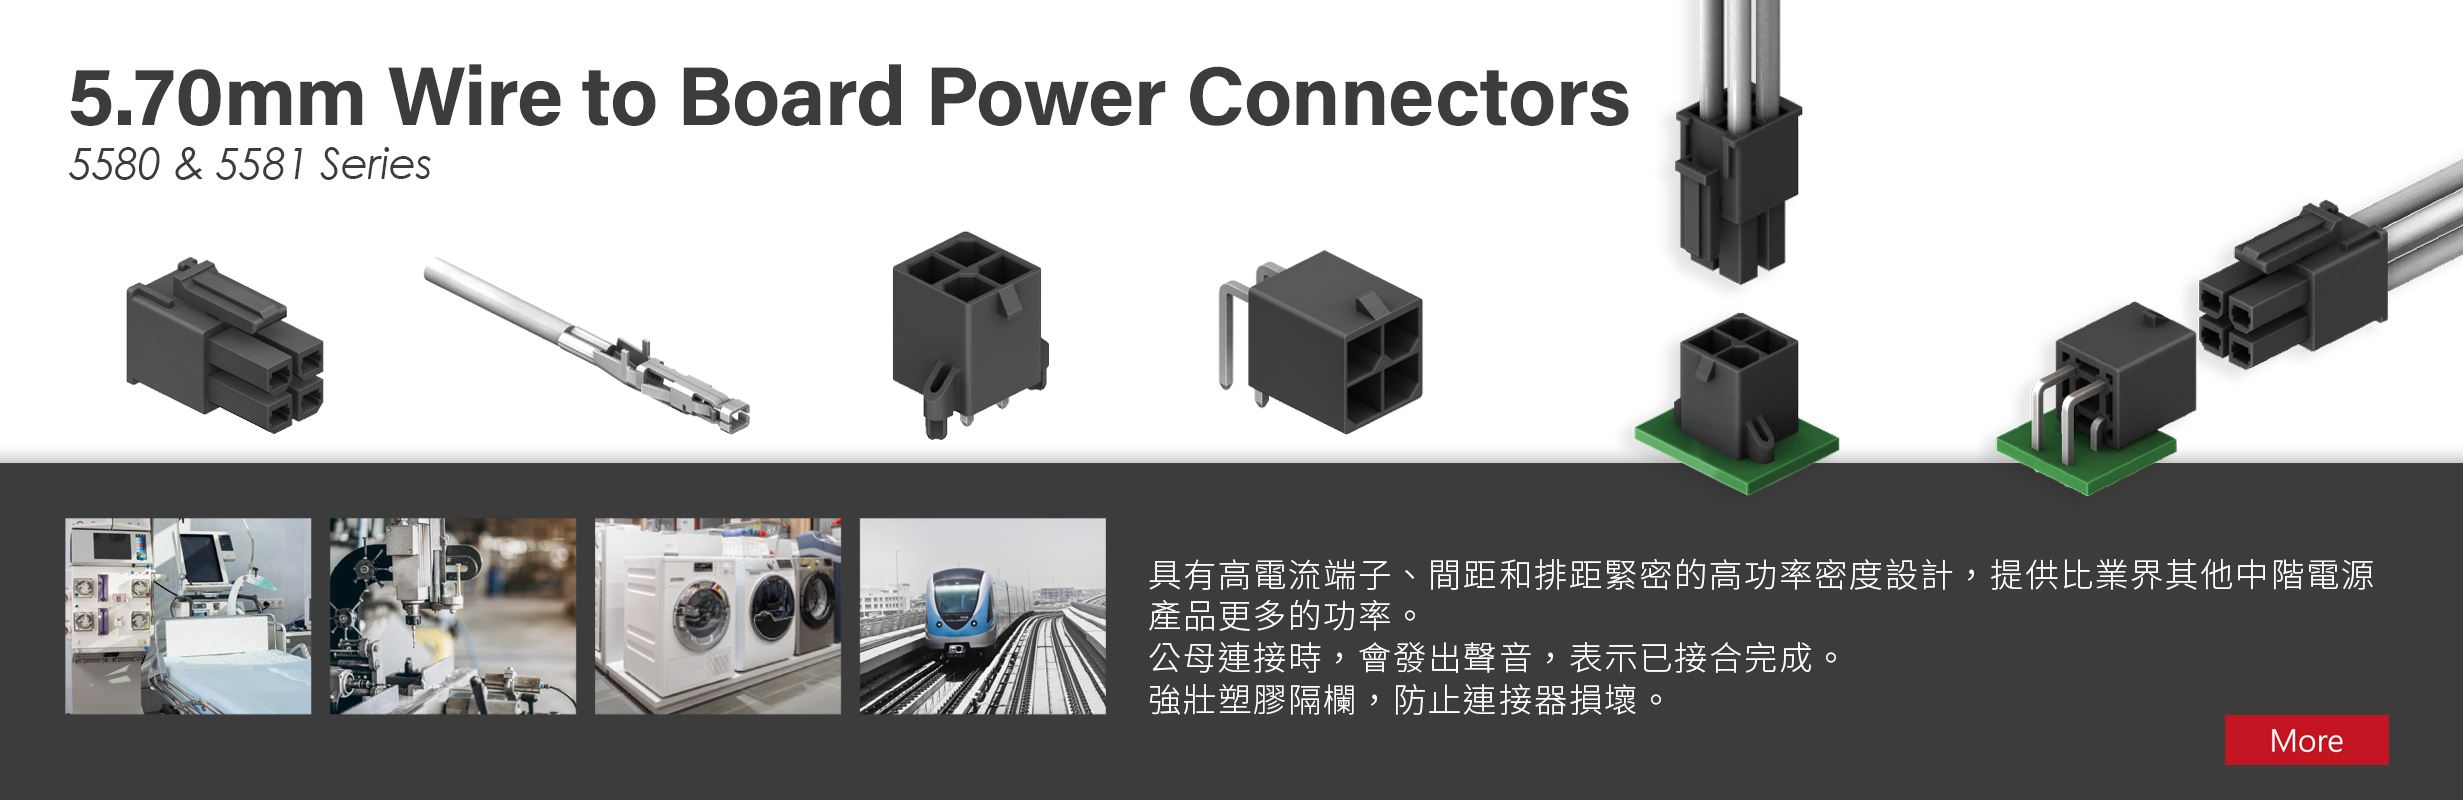 5.70mm Wire to Board Power Connecctors 5580 5581